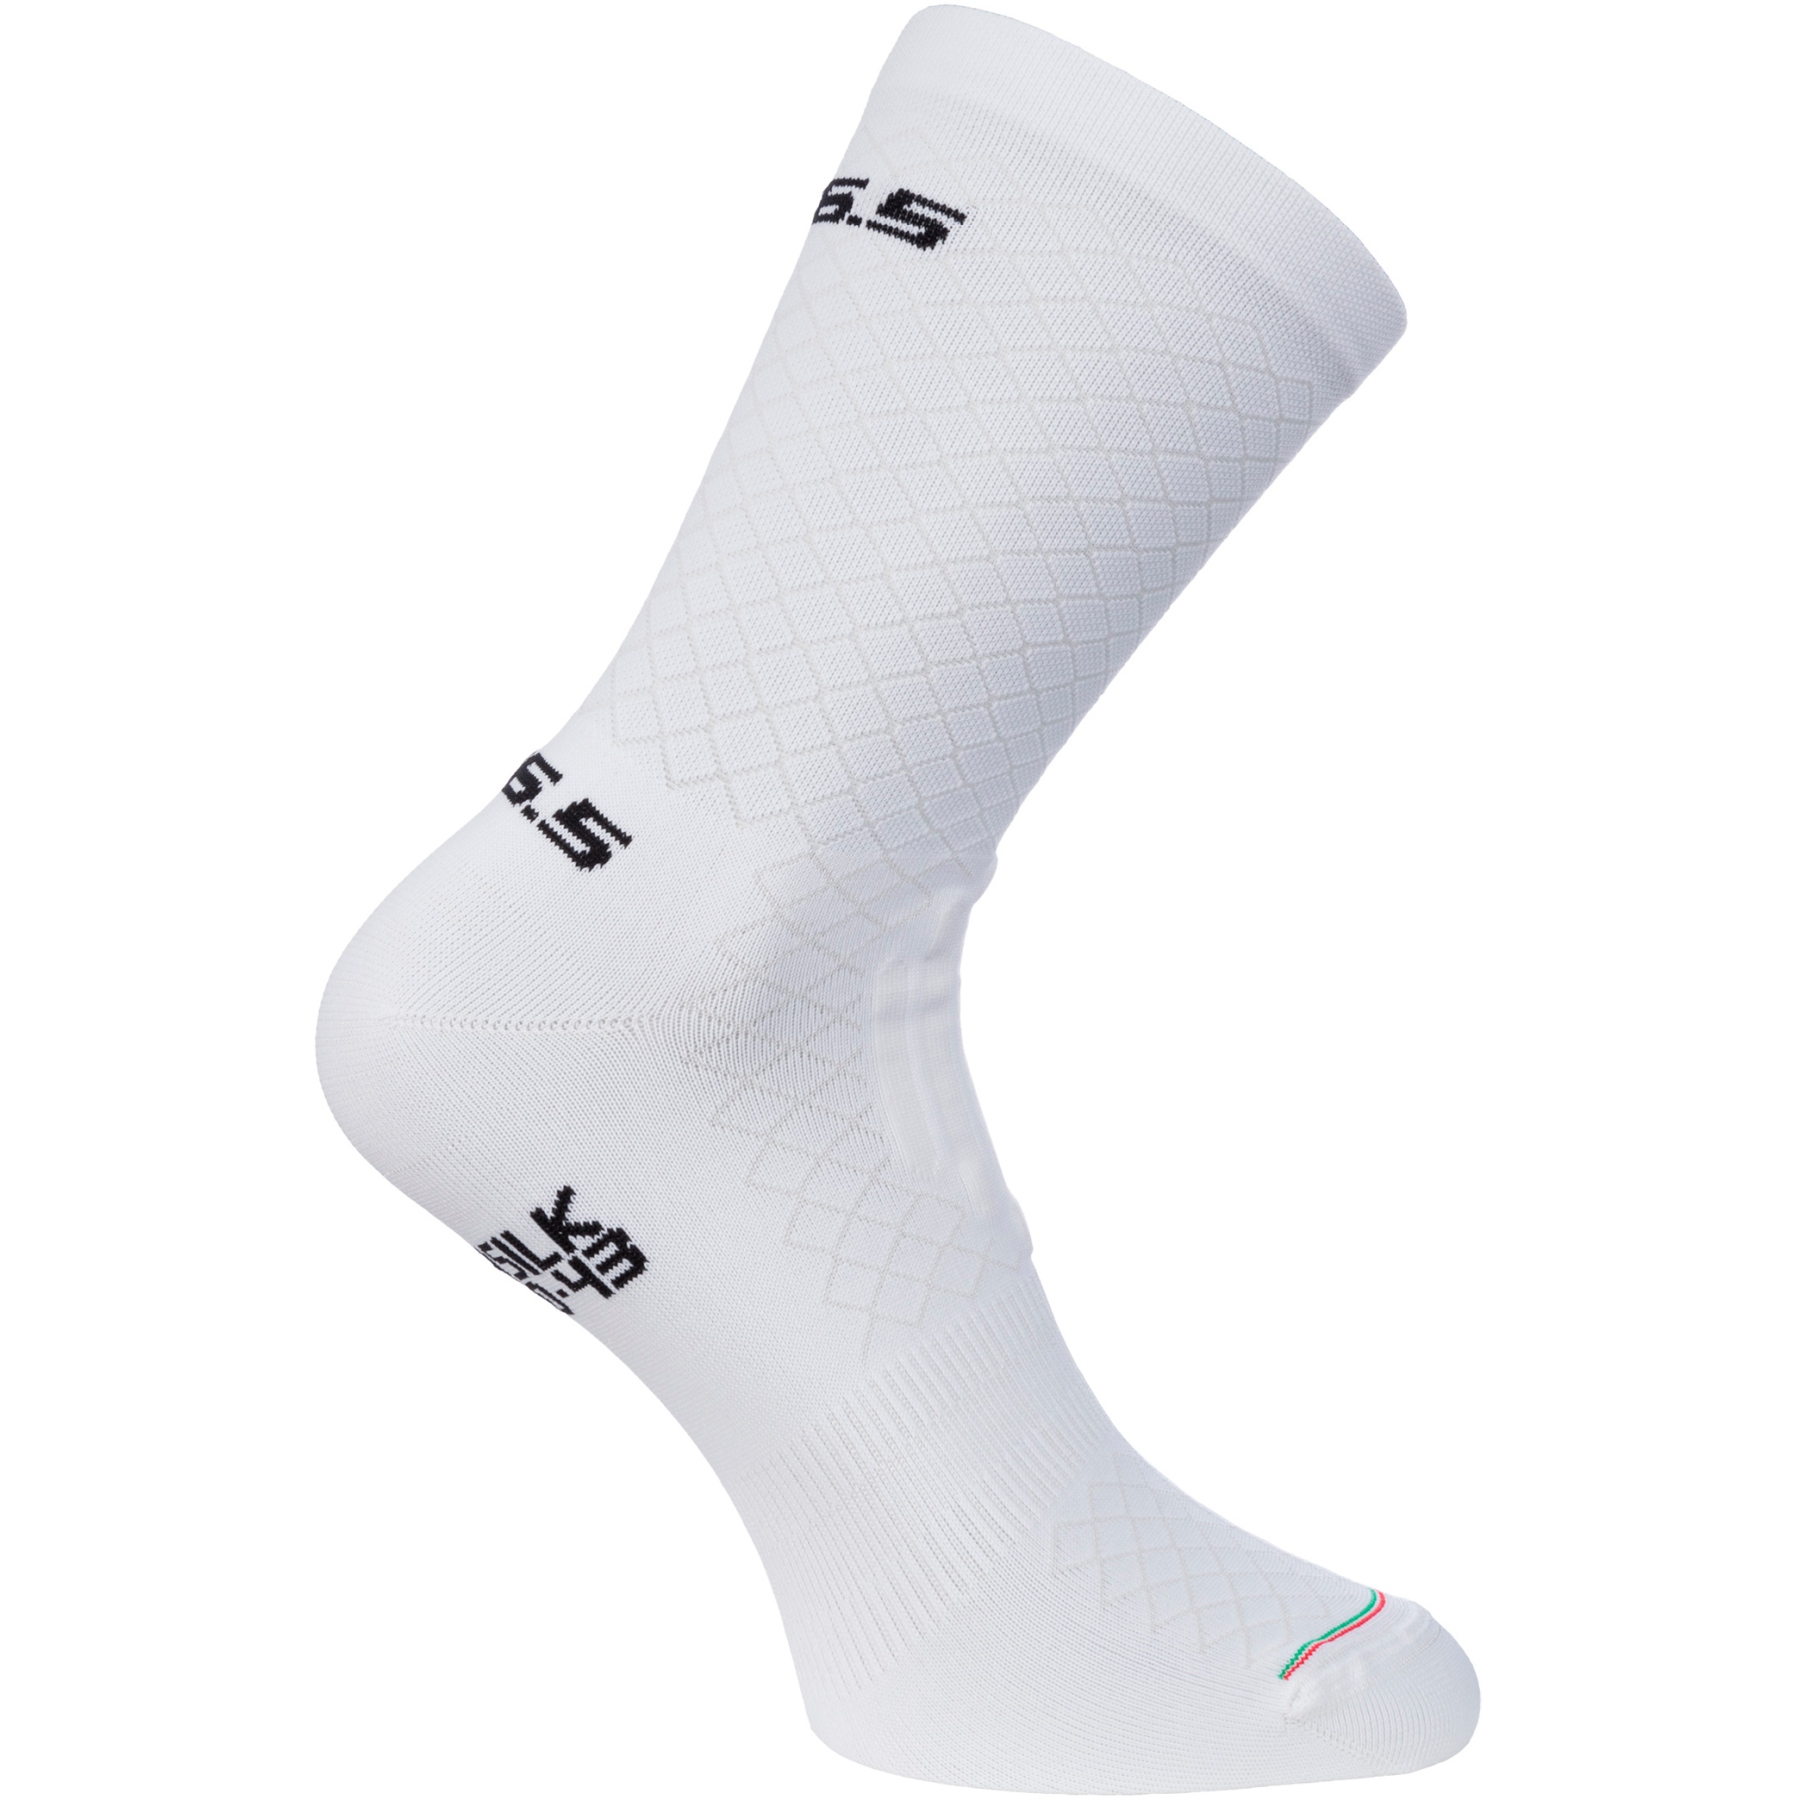 Productfoto van Q36.5 Leggera Socks - white